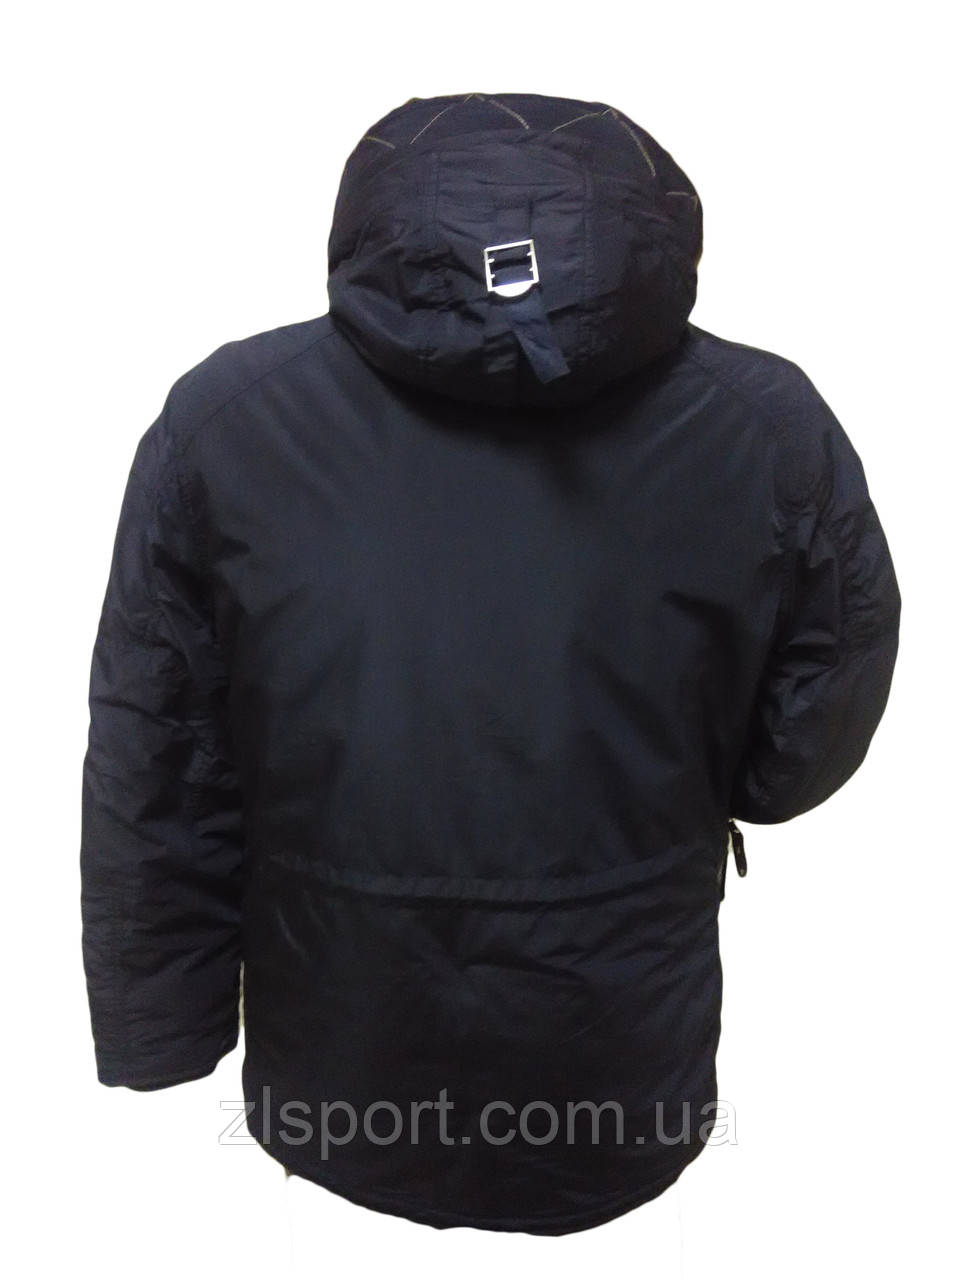 Куртка зимняя мужская Bosline, цена 2930 грн — Prom.ua (ID#435524340)